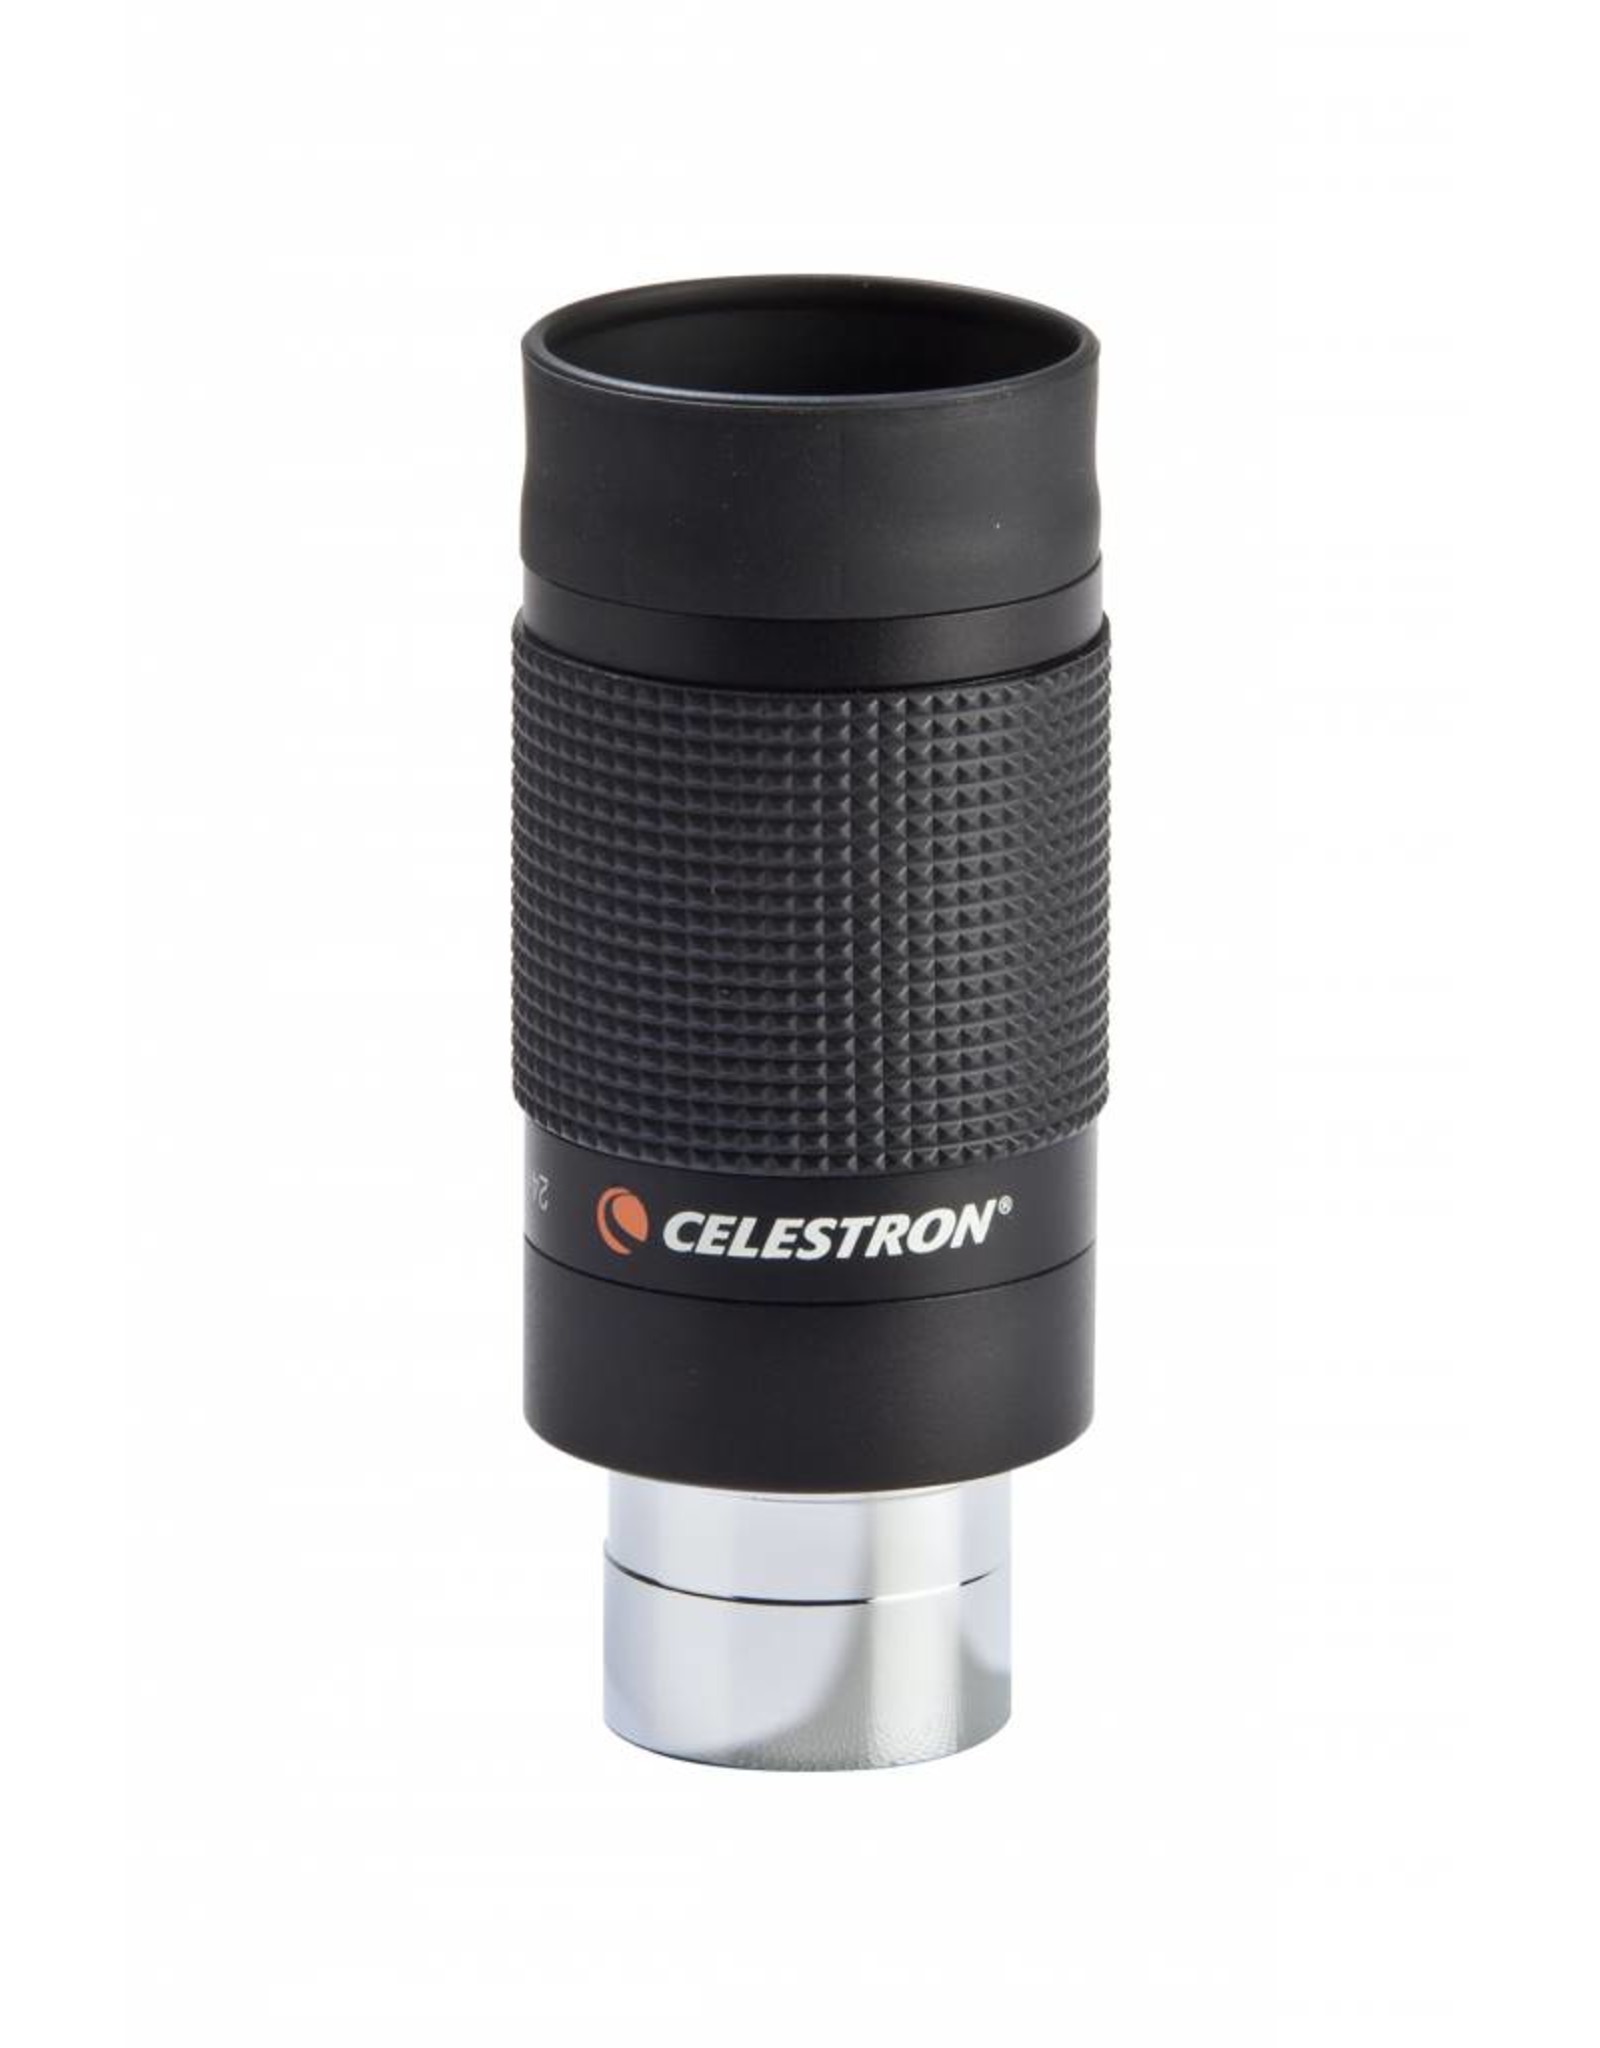 Celestron Celestron Zoom Eyepiece 1.25 in - 8-24mm